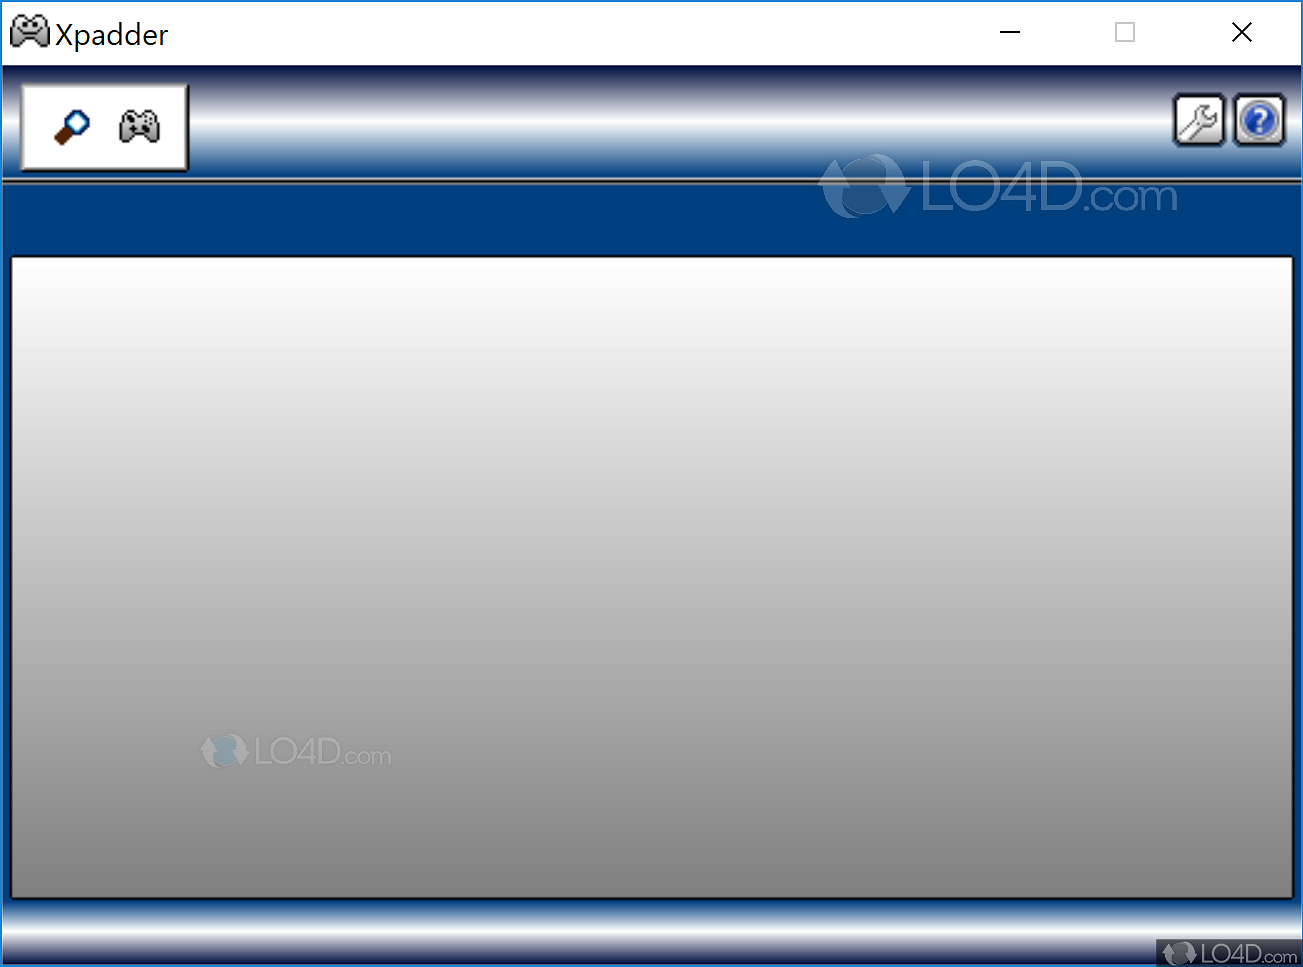 Xpadder 5 7 Windows 7 64 bit